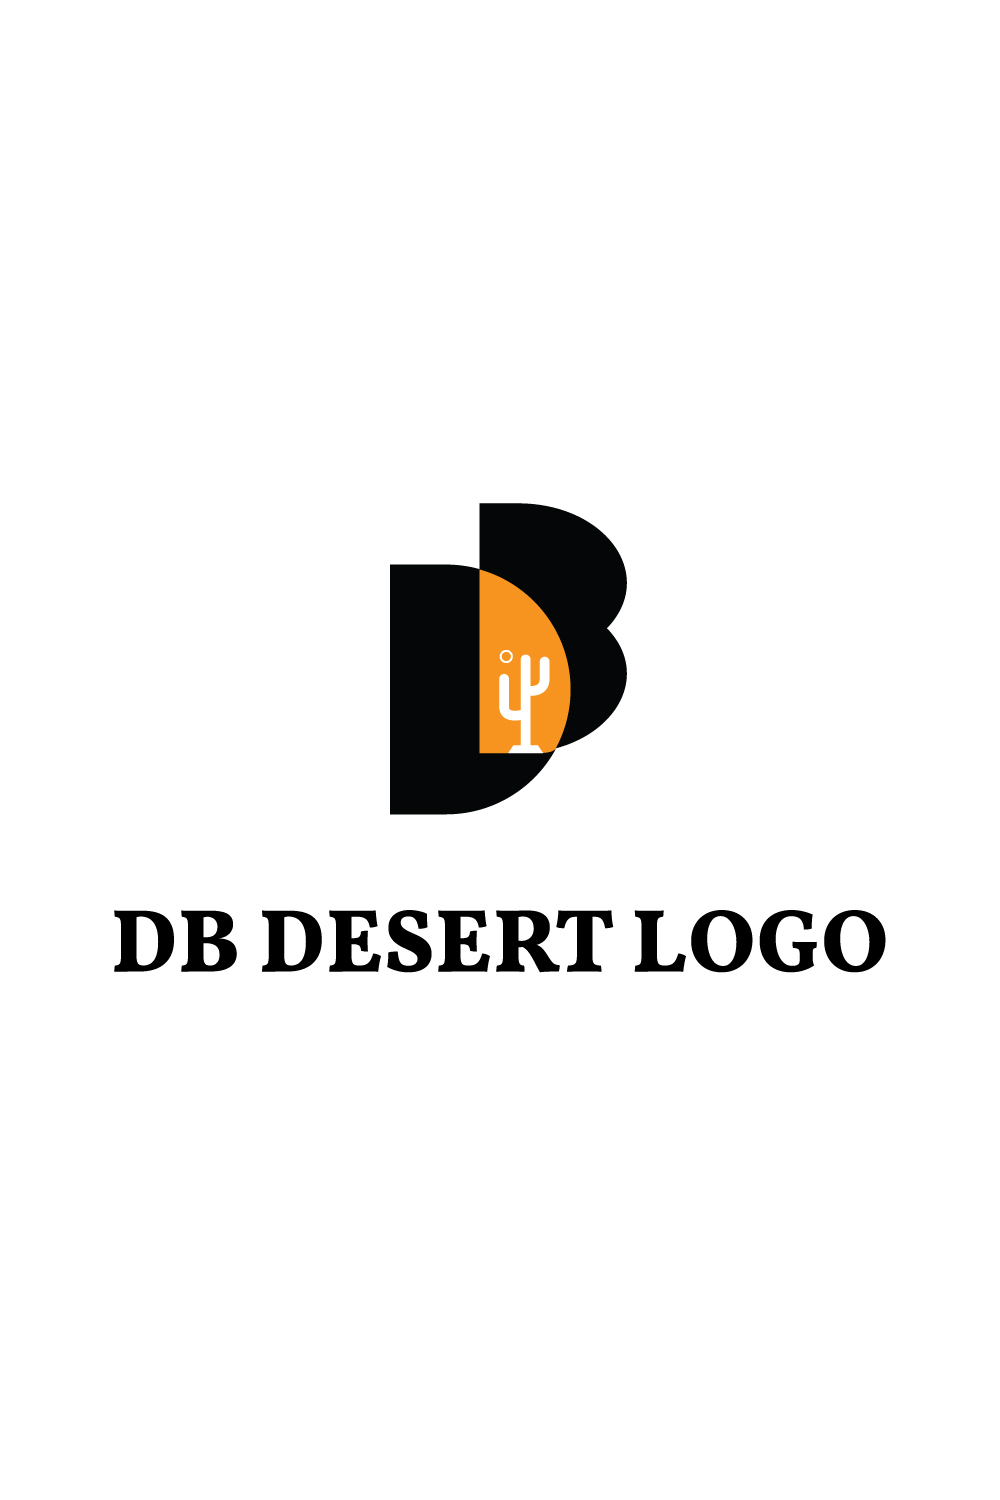 DB Letter Logo pinterest preview image.